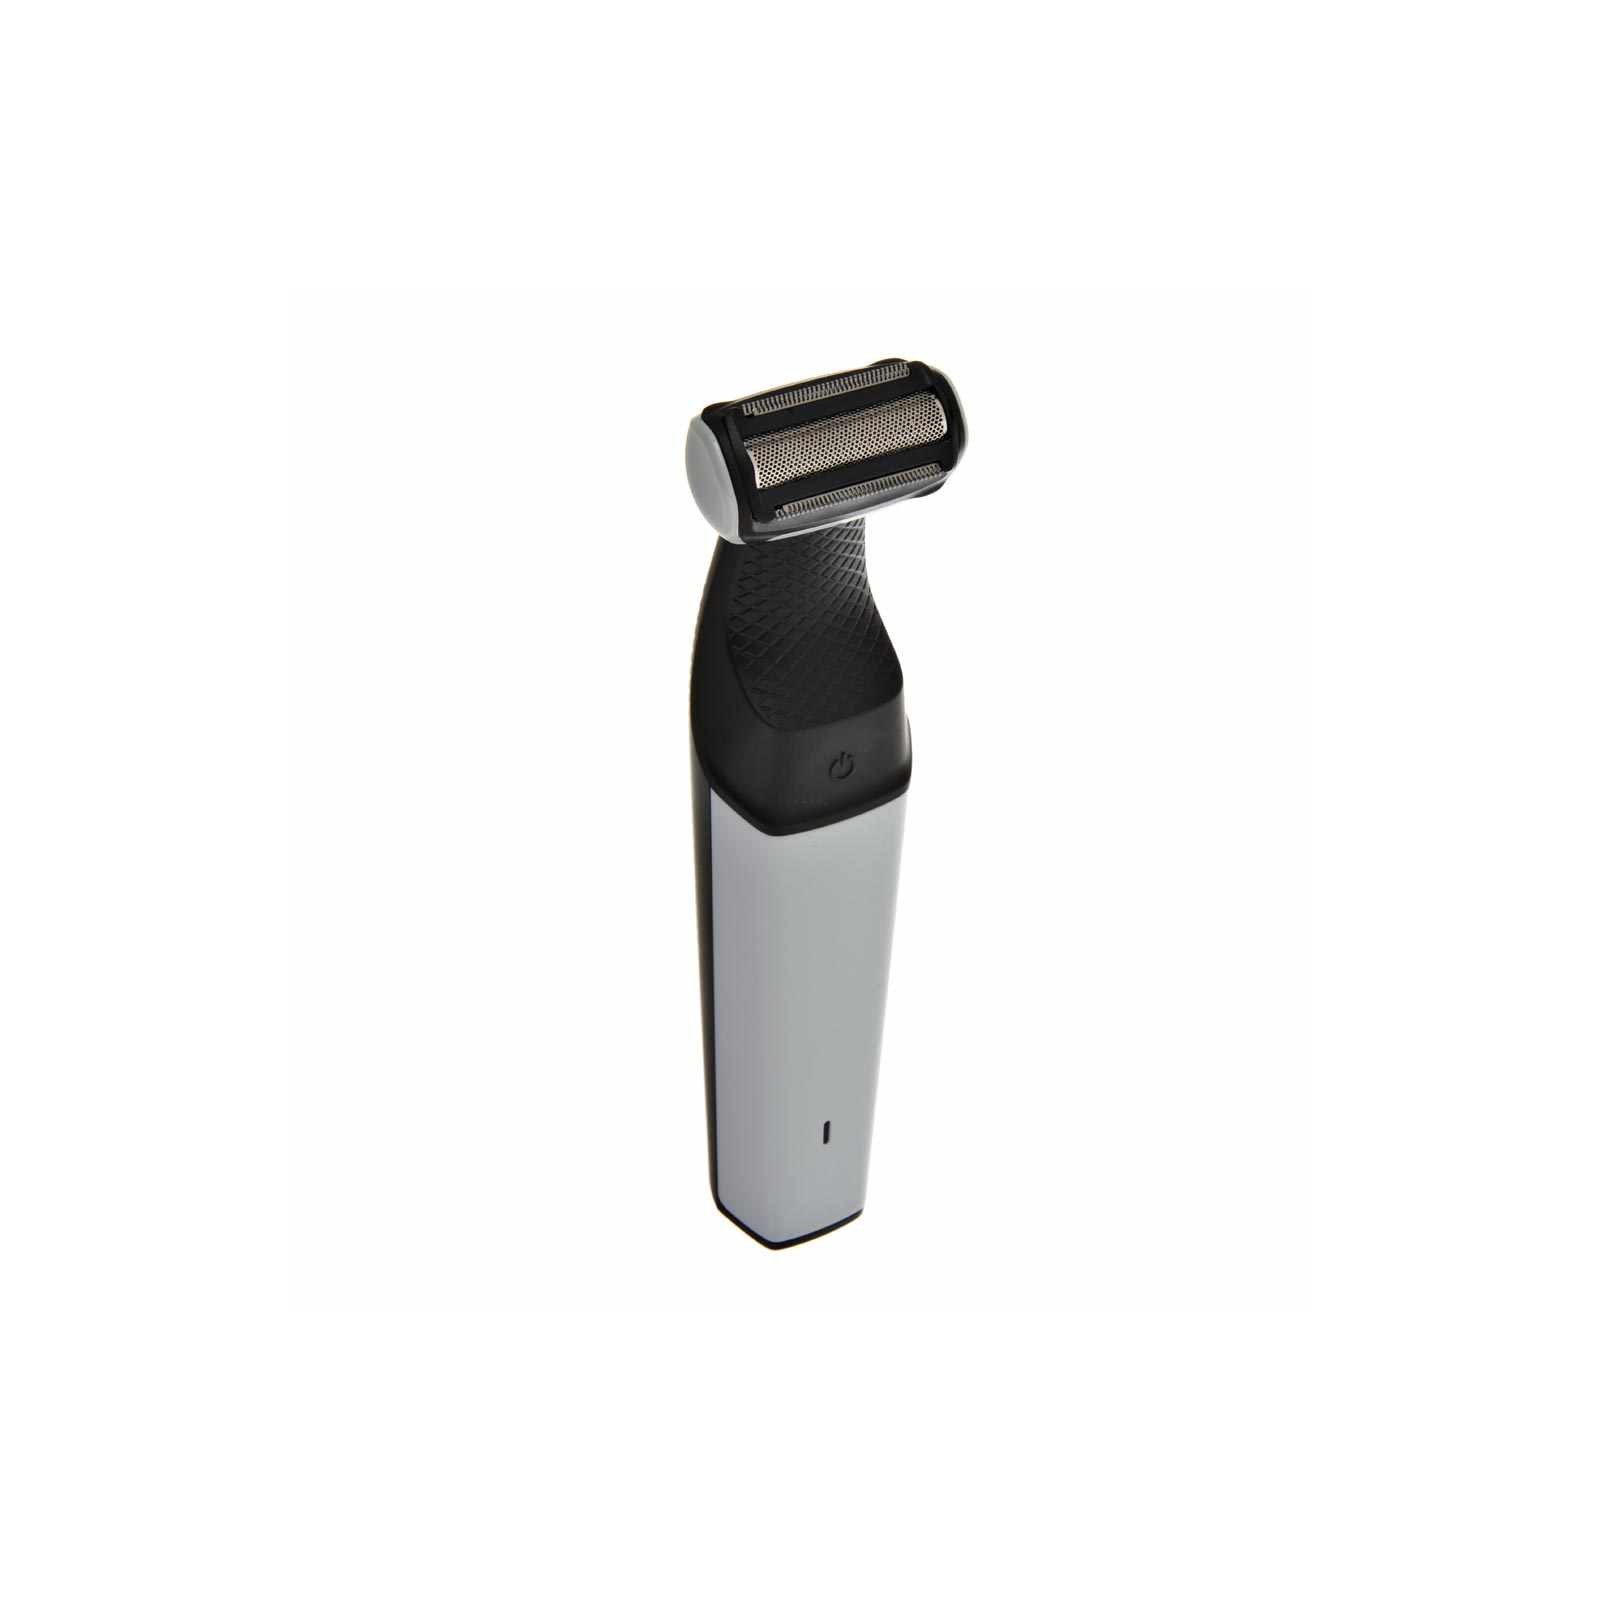 Afeitadora de cabeza, afeitadoras eléctricas para hombres, carga USB y  largo tiempo de uso continuo